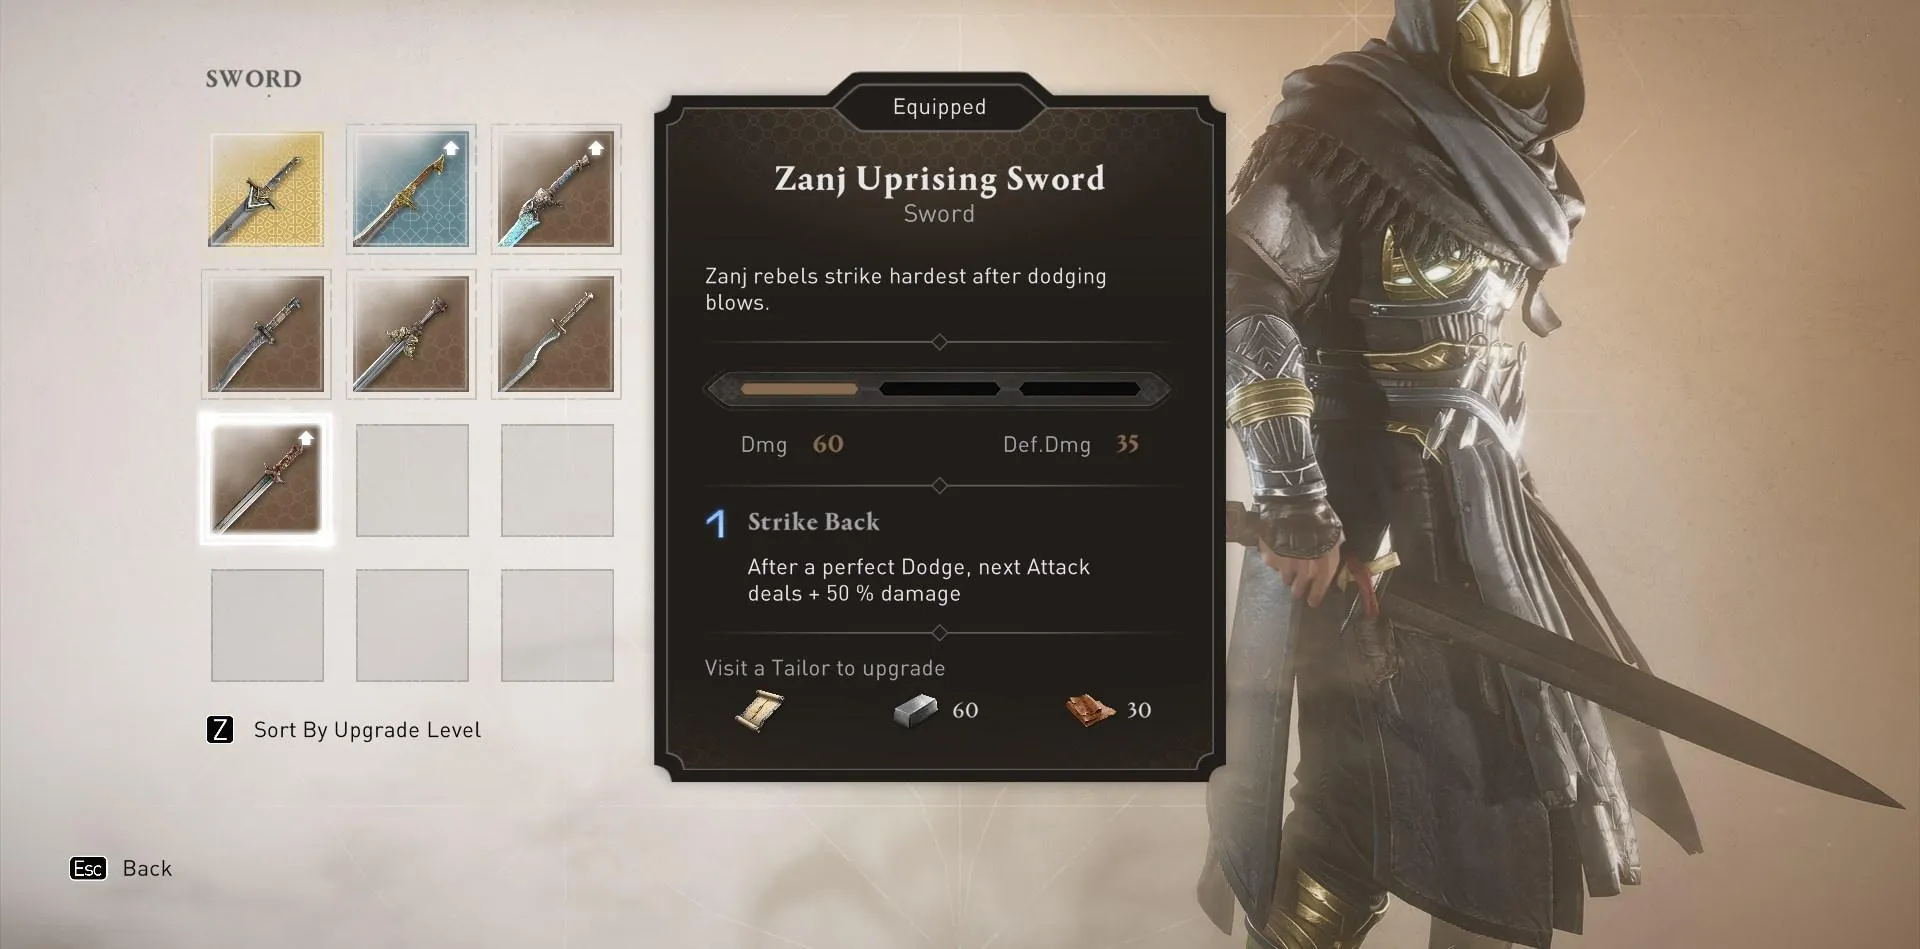 Zanji Uprising Sword